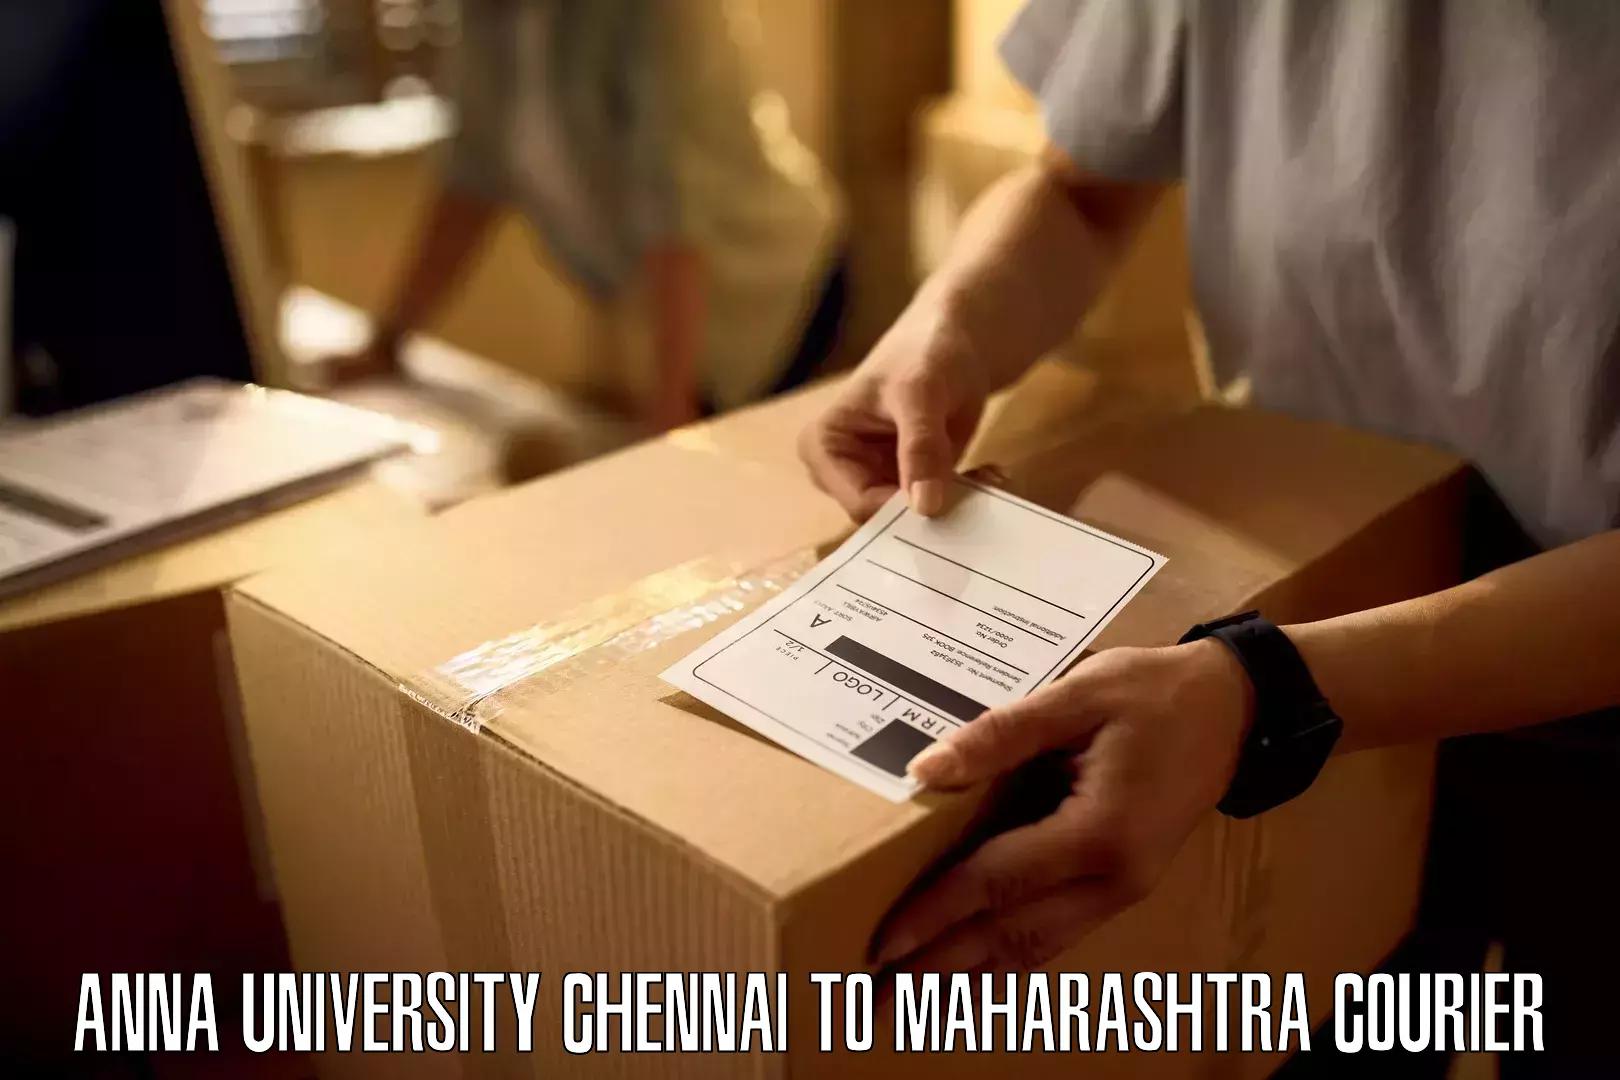 Courier service partnerships Anna University Chennai to Shrigonda